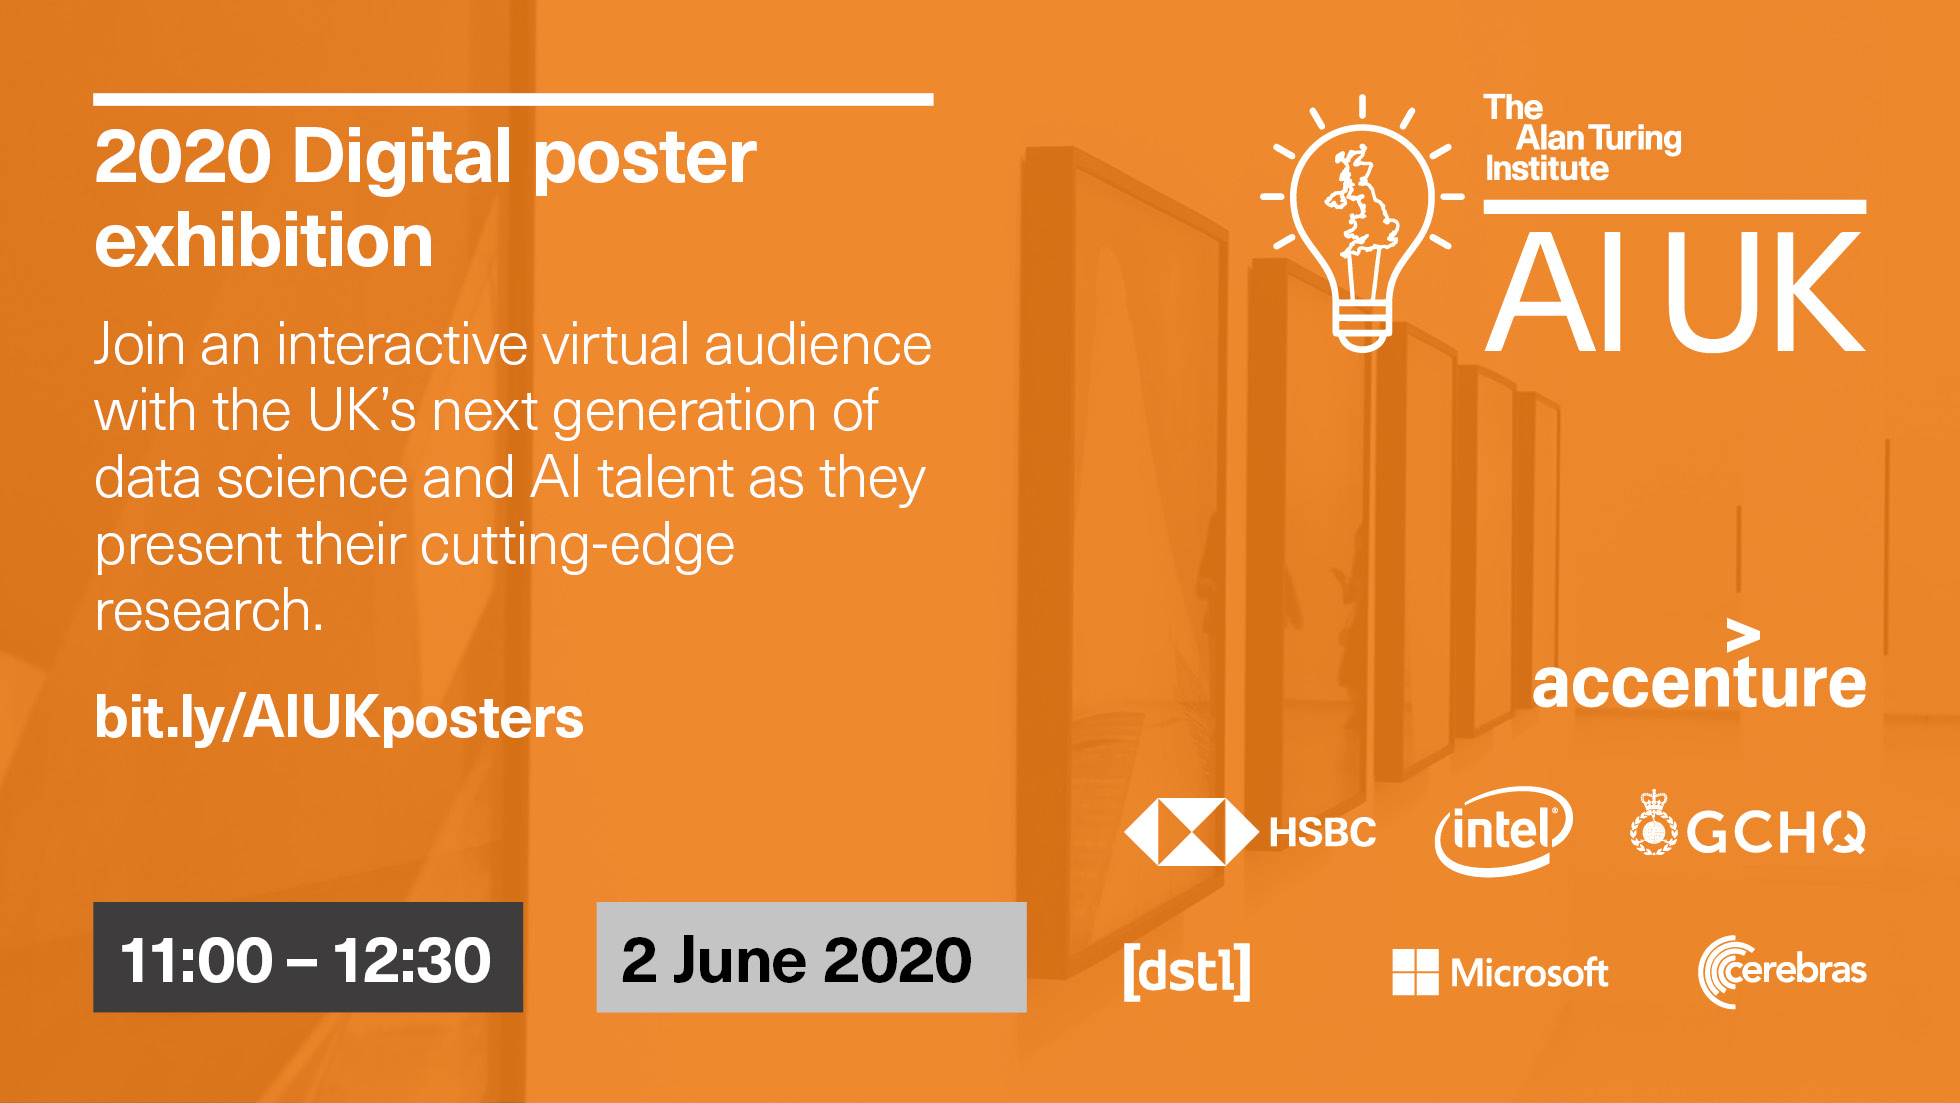 Advert for AI UK 2020 Digital poster exhibition 2 June 2020